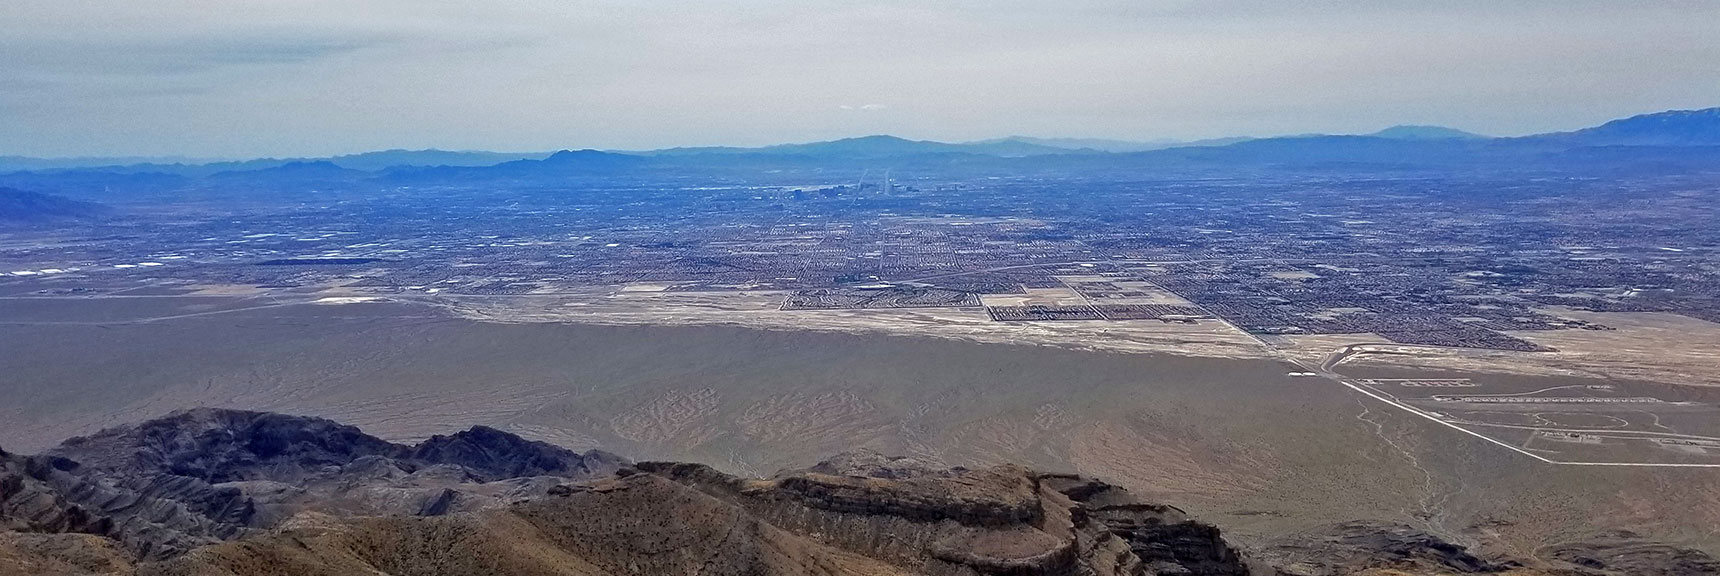 View of Northeastern Las Vegas from Near the Eastern Summit of Gass Peak | Gass Peak Eastern Summit Ultra-marathon Adventure, Nevada